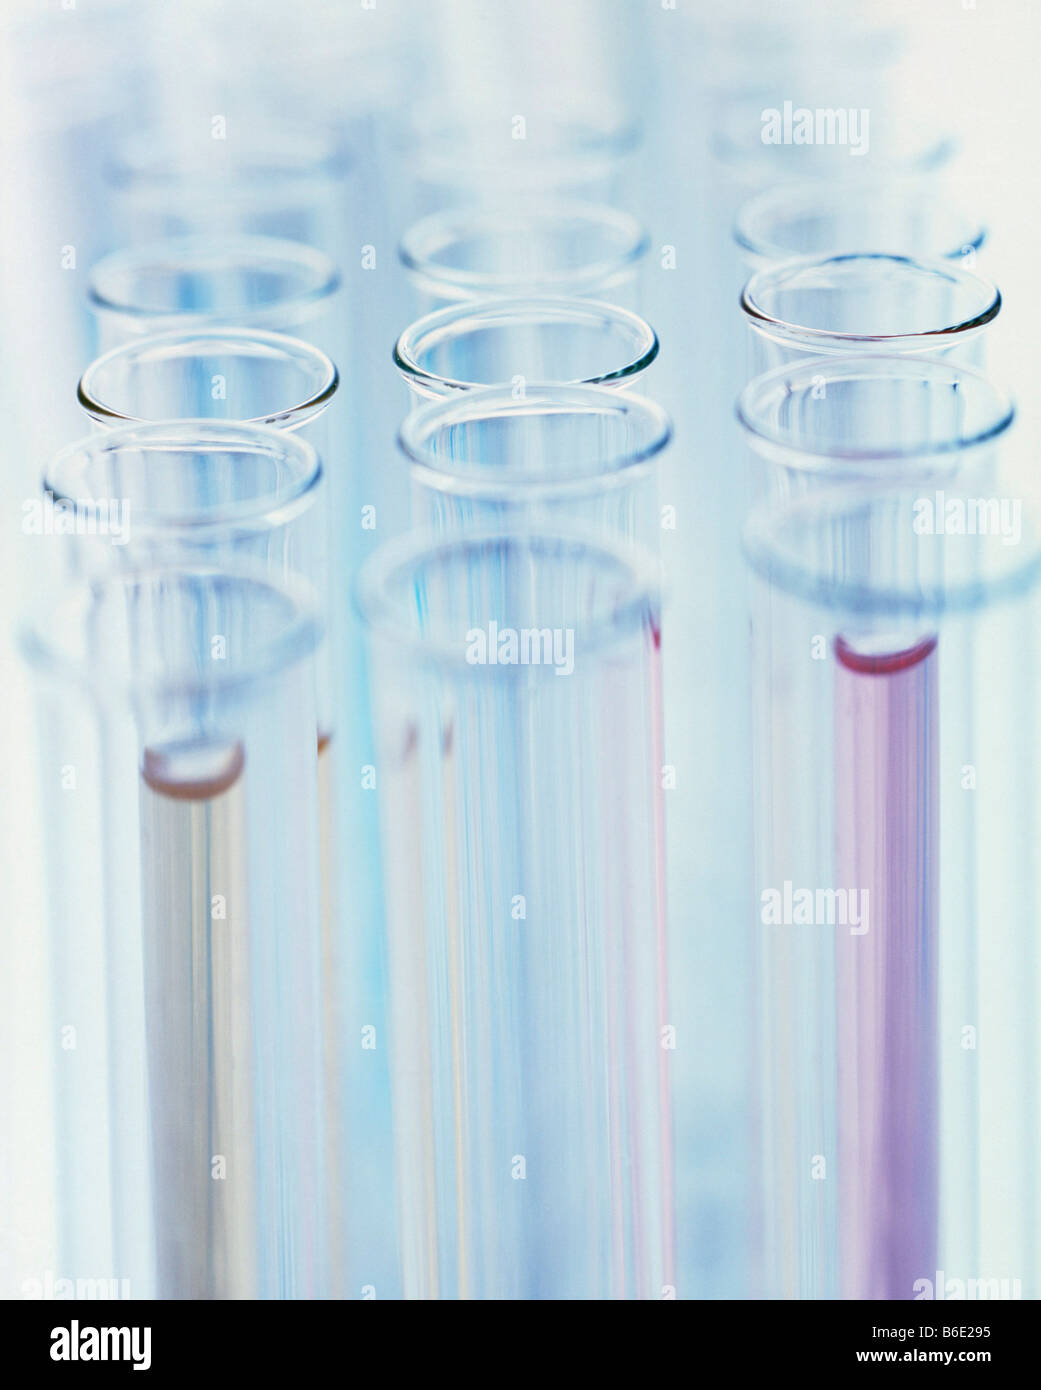 Test tubes. Group of laboratory test tubes. Stock Photo